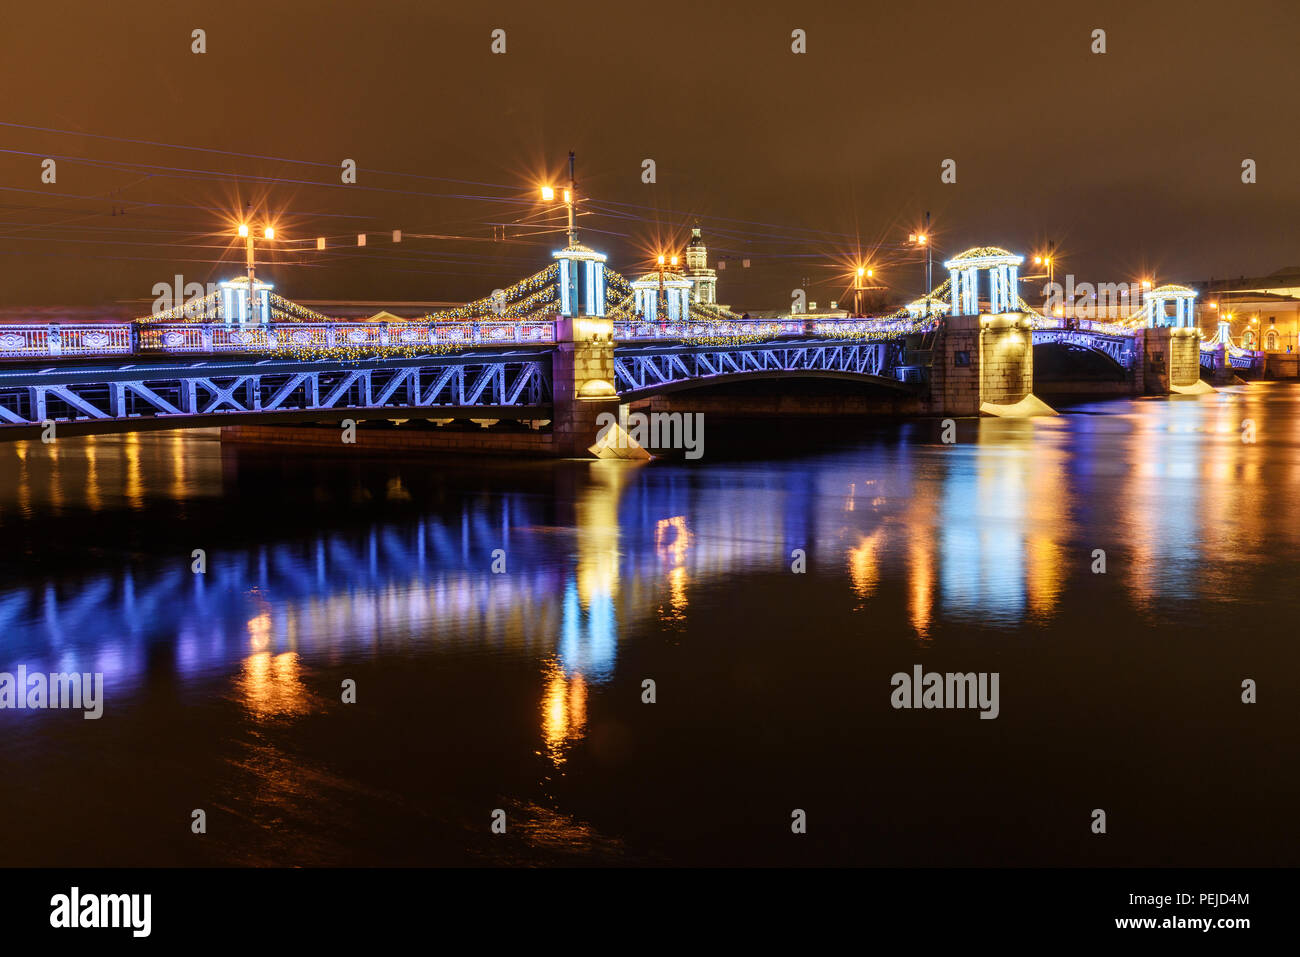 Palace Bridge at night. New Year and Christmas illumunated. Saint Petersburg, Russia Stock Photo